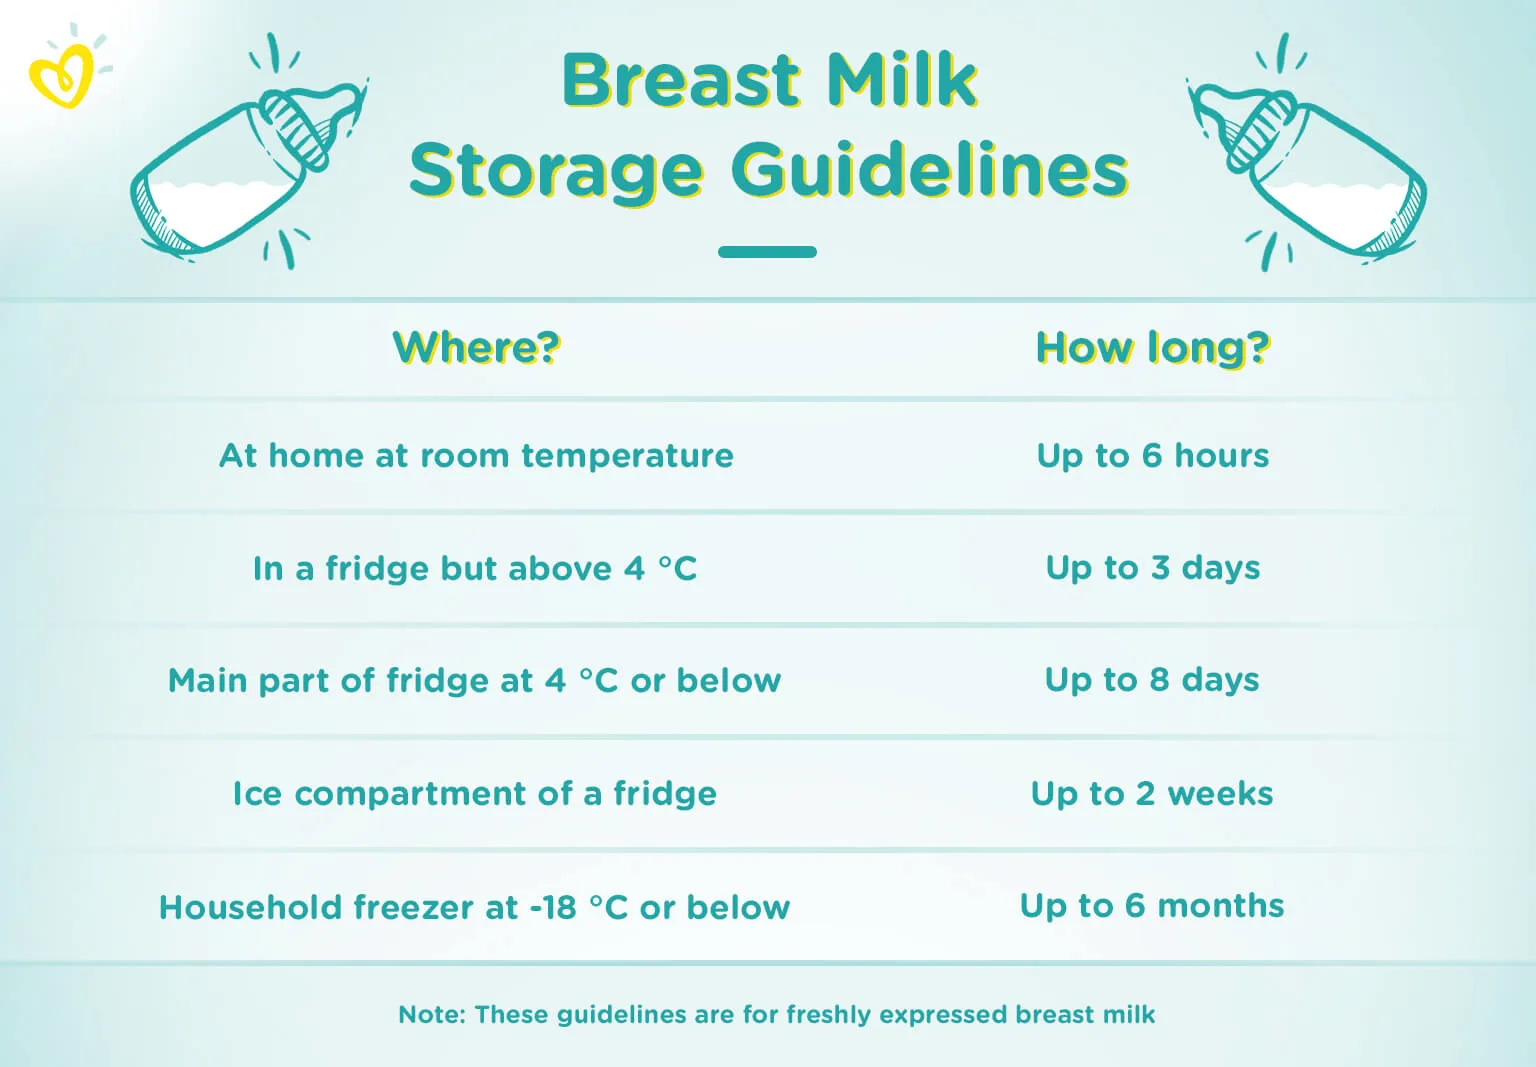 https://images.ctfassets.net/3shtzlb7cz90/1qXV1QVJUK9MslsAtQoGuU/8717d153036c6554942de88ea1456156/Breast_milk_storage_time_guidelines_UK_1536.jpeg?fm=webp&q=70